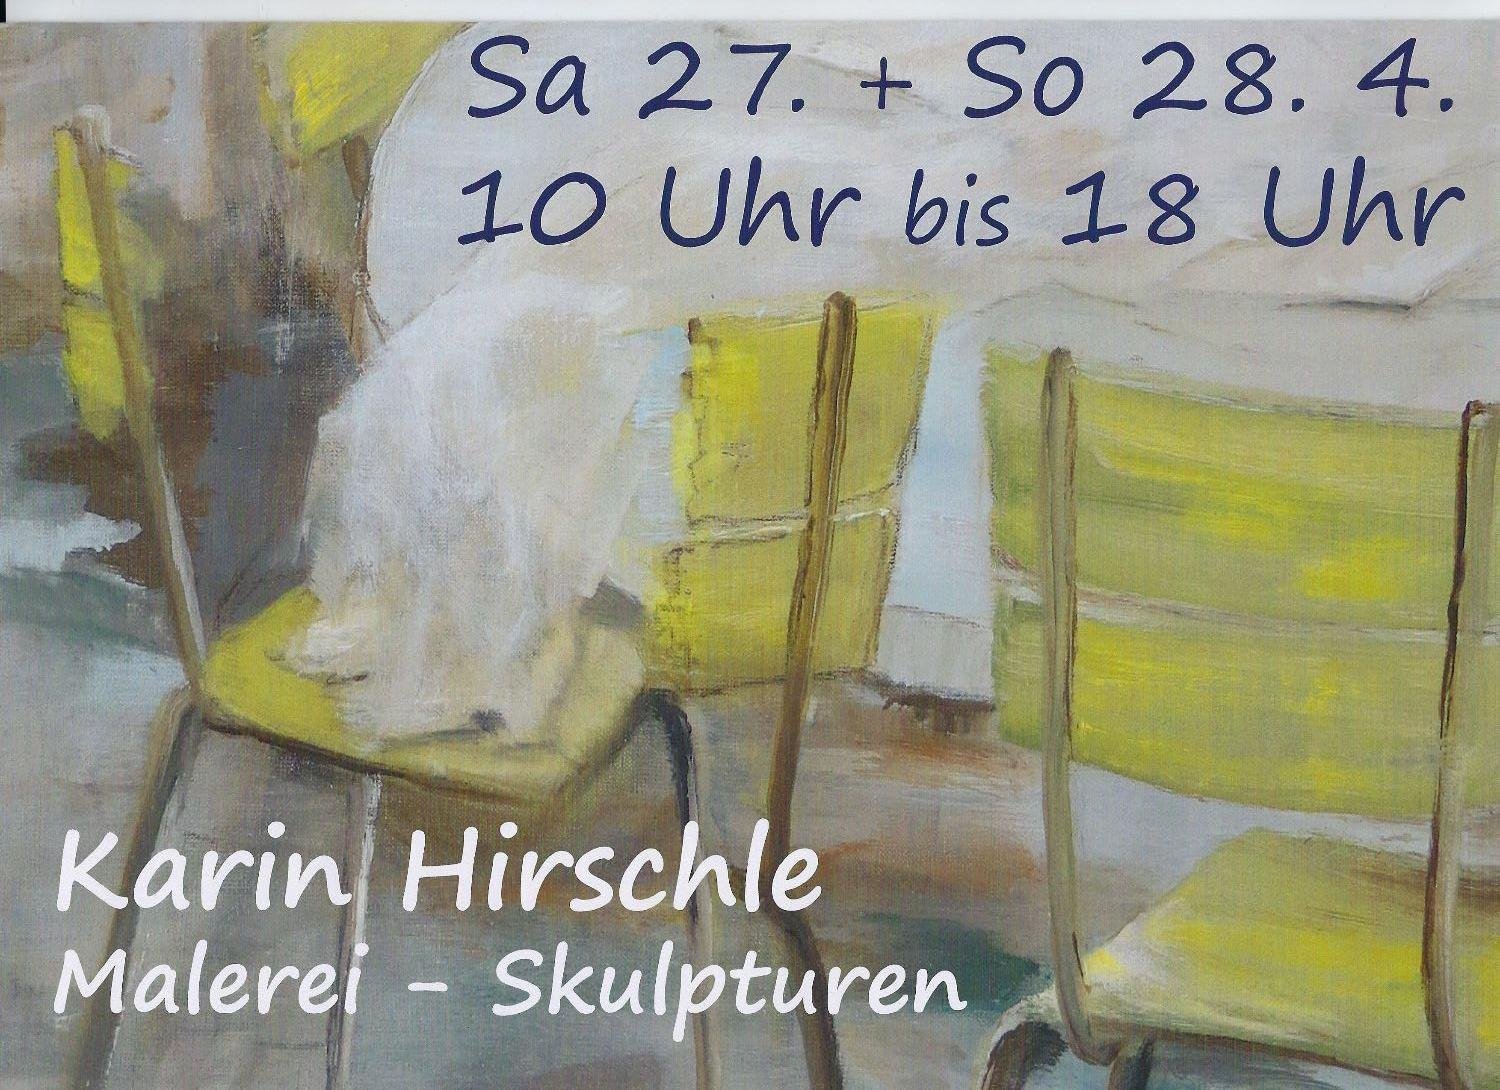 Karin Hirschle - Malerei/Skulpturen / Urheber: Karin Hirschle